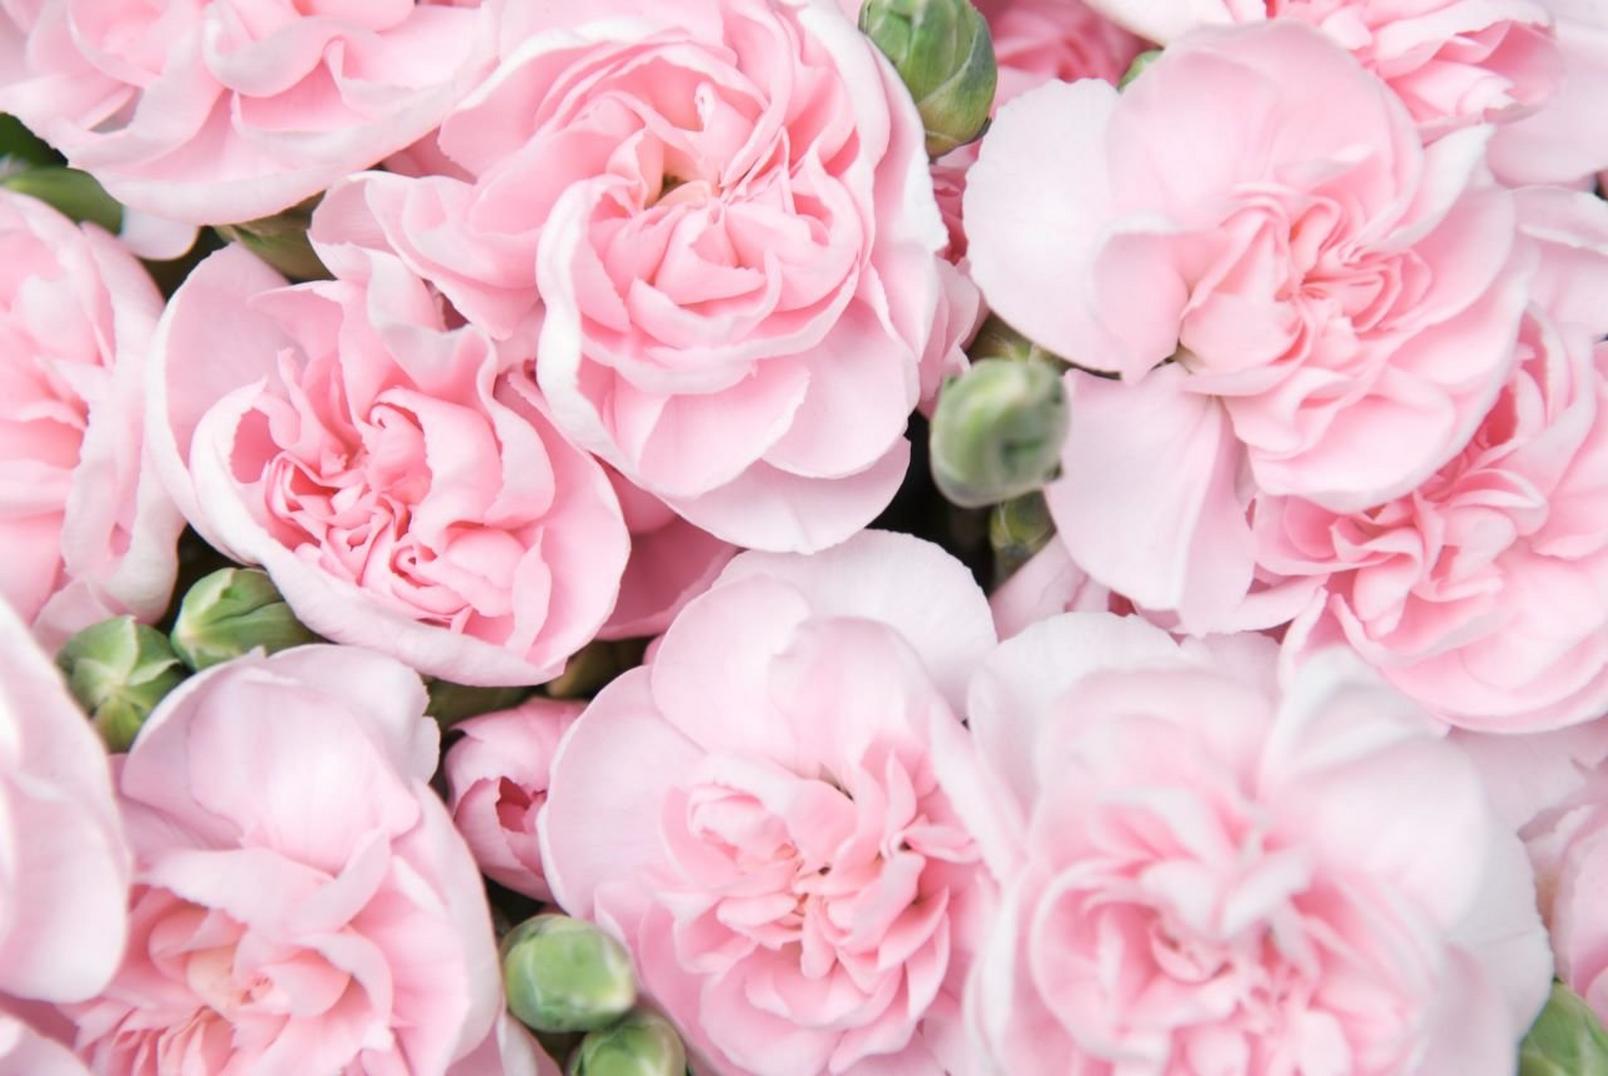 spray-carnations-pink-flowers